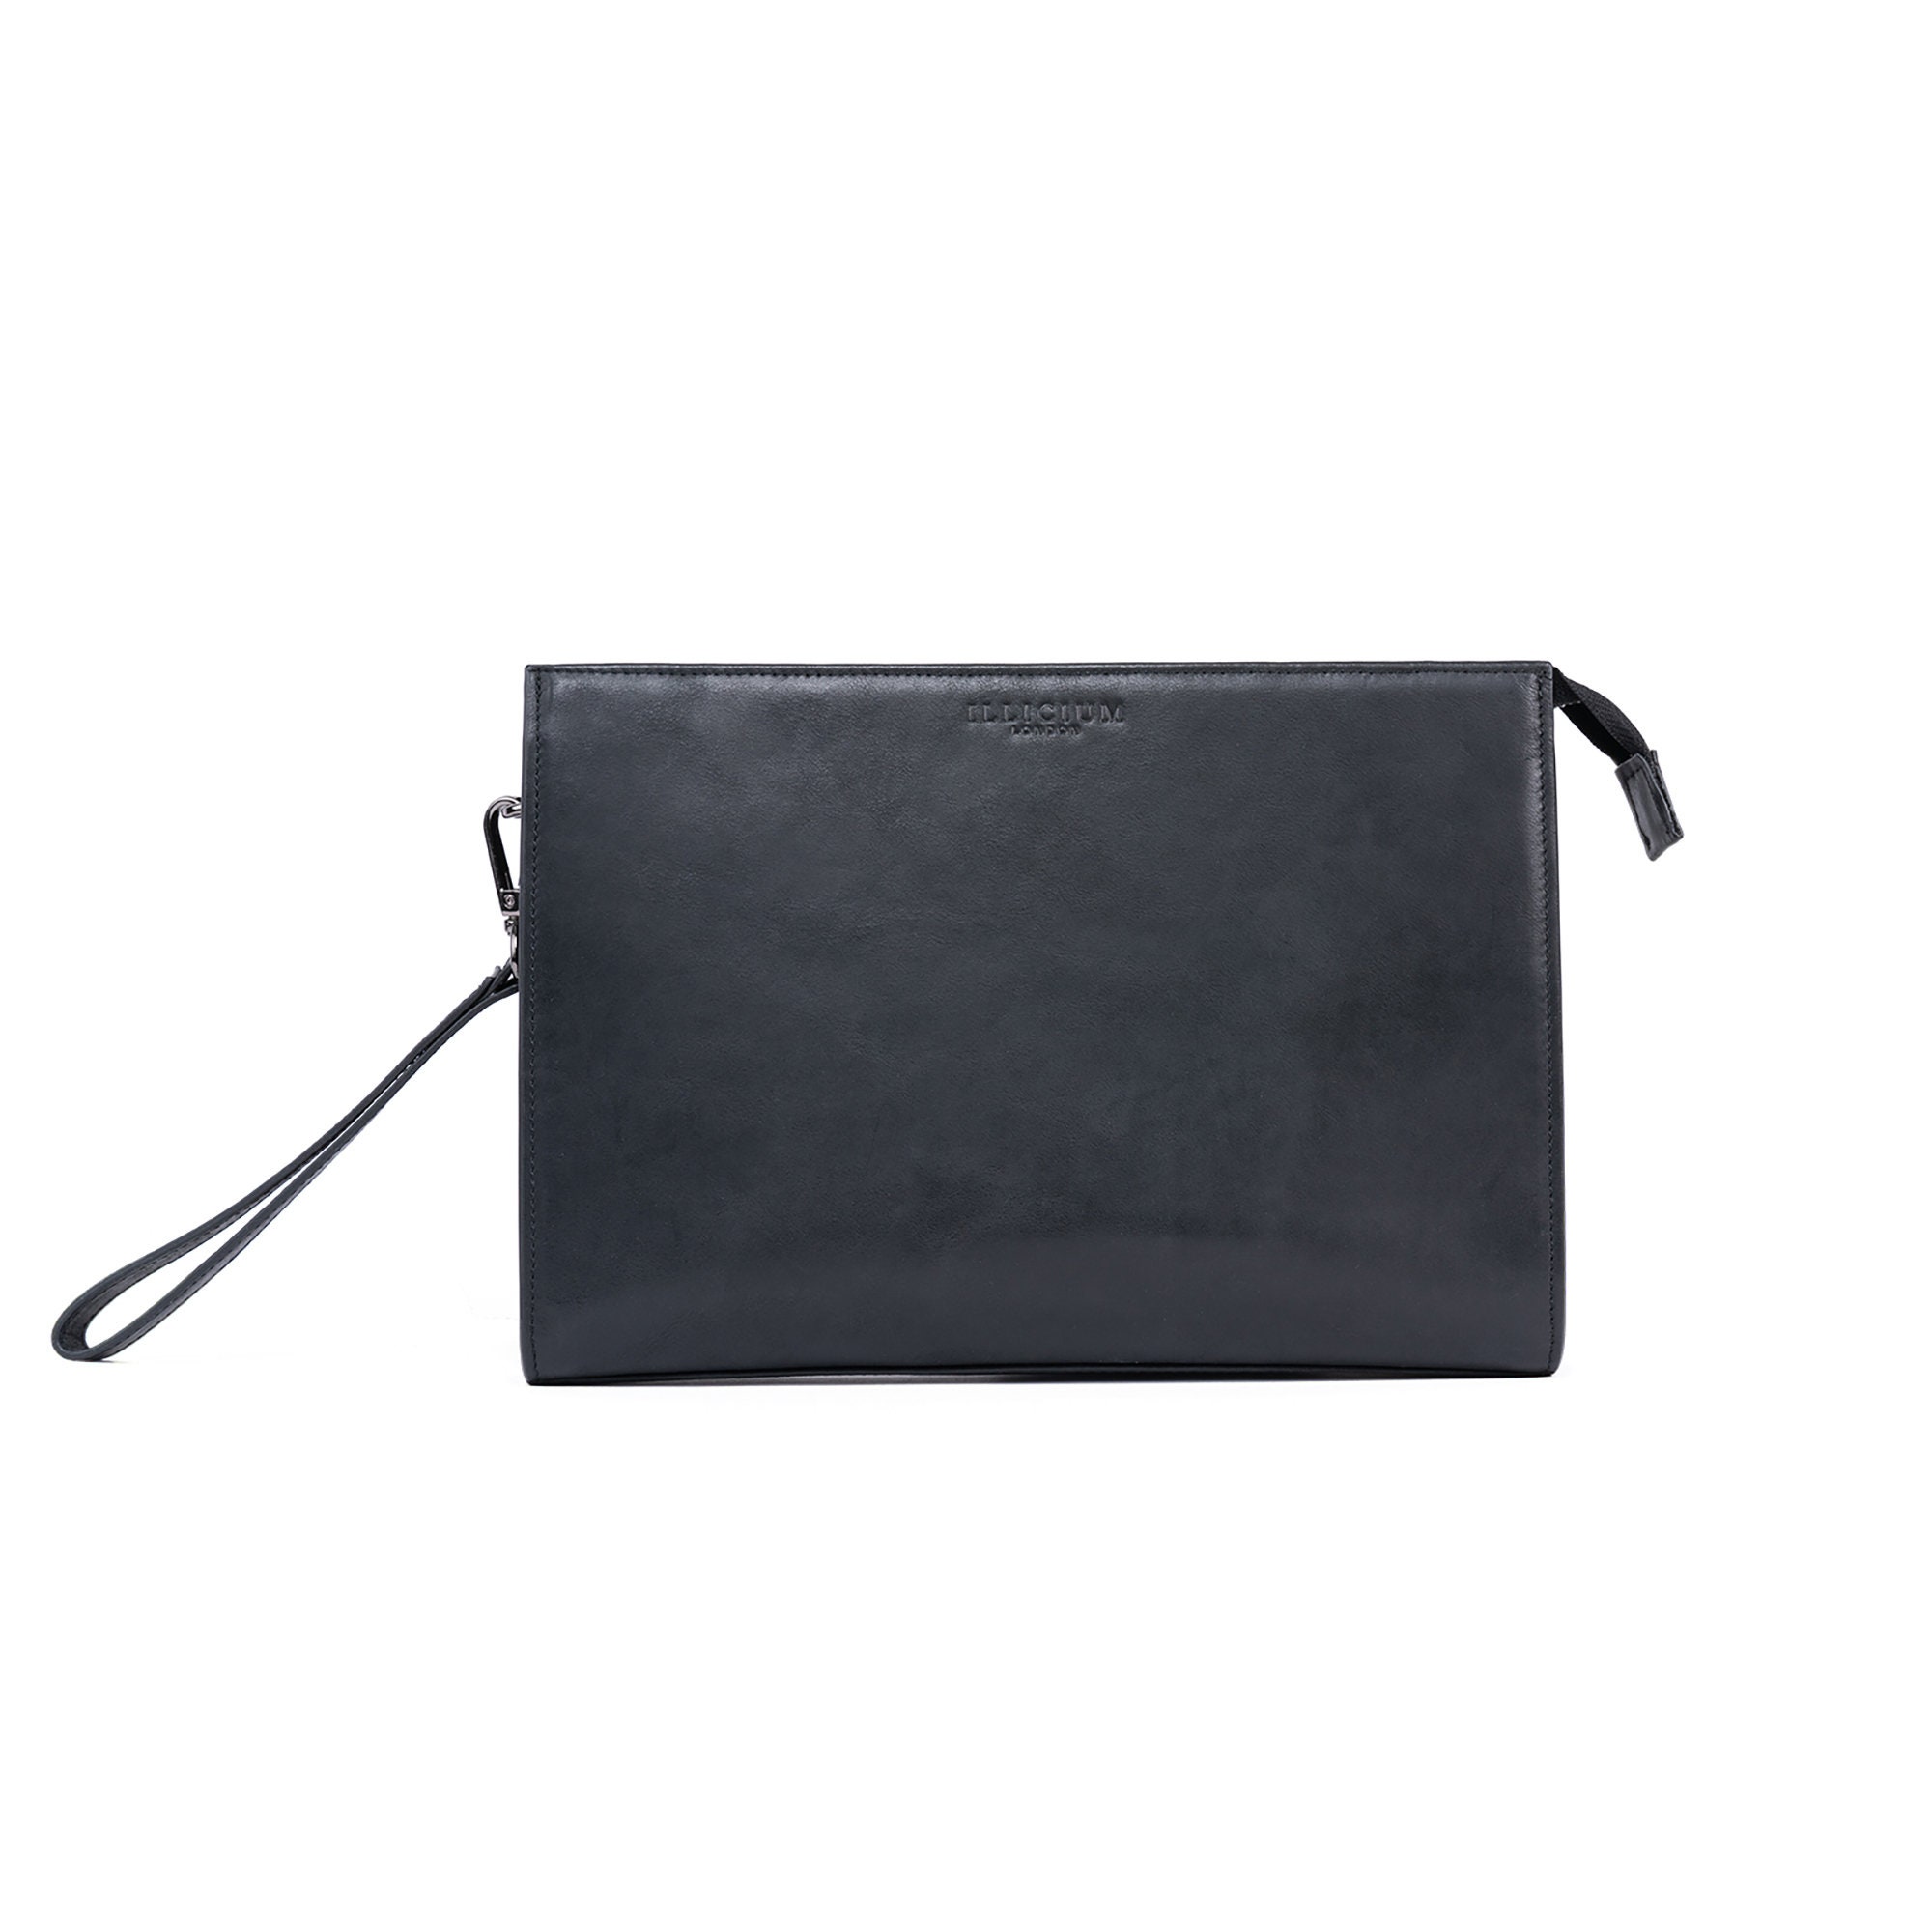 Yves Saint Laurent Monogram Key Pouch Coin Purse 485632 Calfskin Black Used